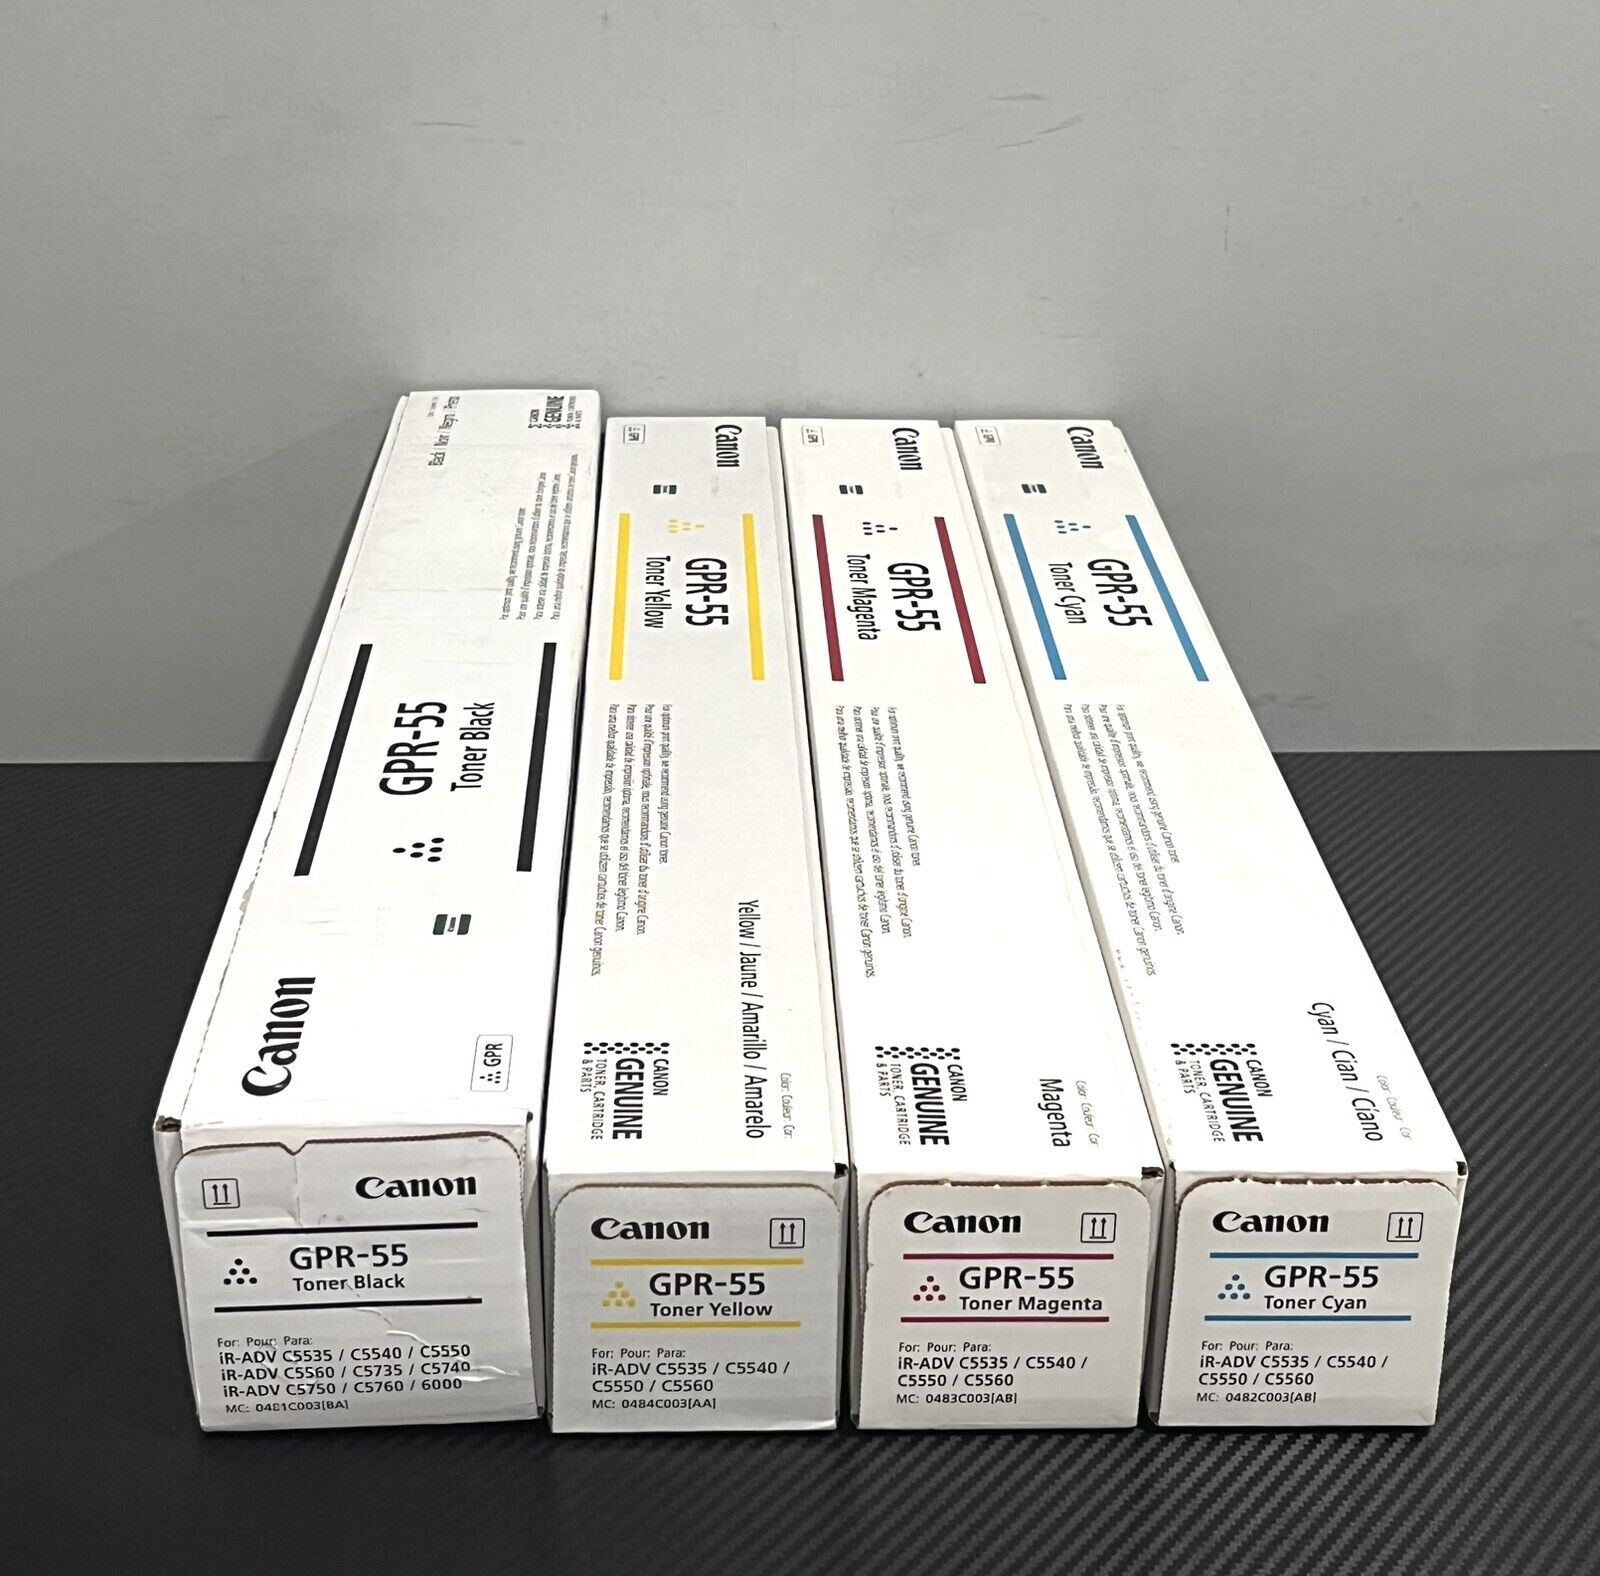 CANON GPR-55 Toner Cartridge Set Black Cyan Magenta Yellow C5535i,C5540i,C5550i